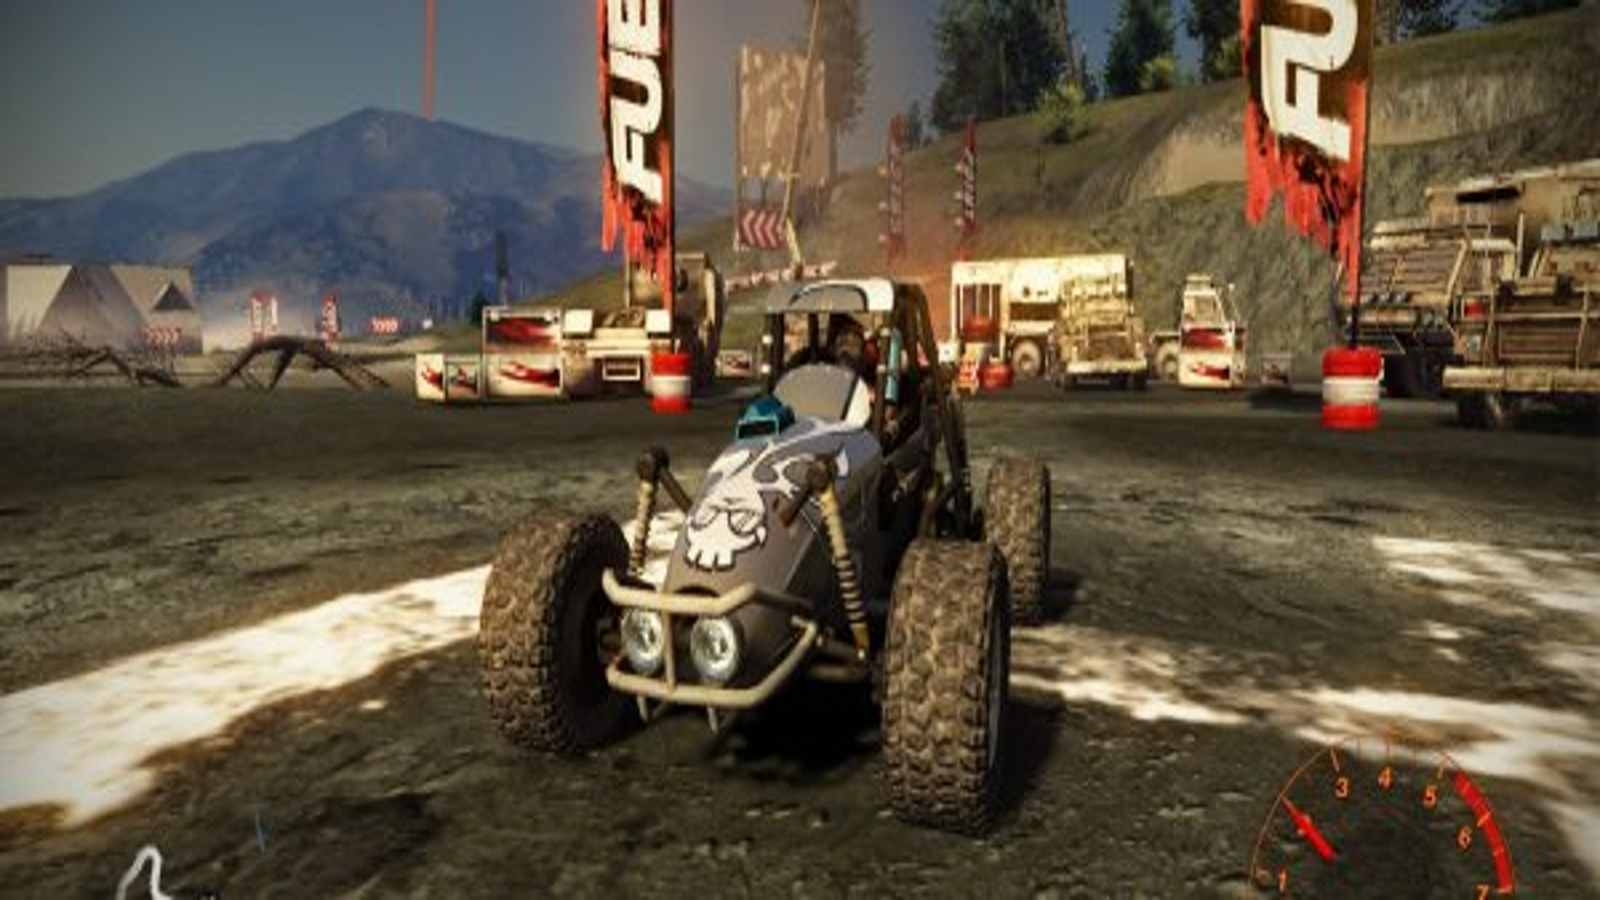  Fuel - Xbox 360 : Automotive